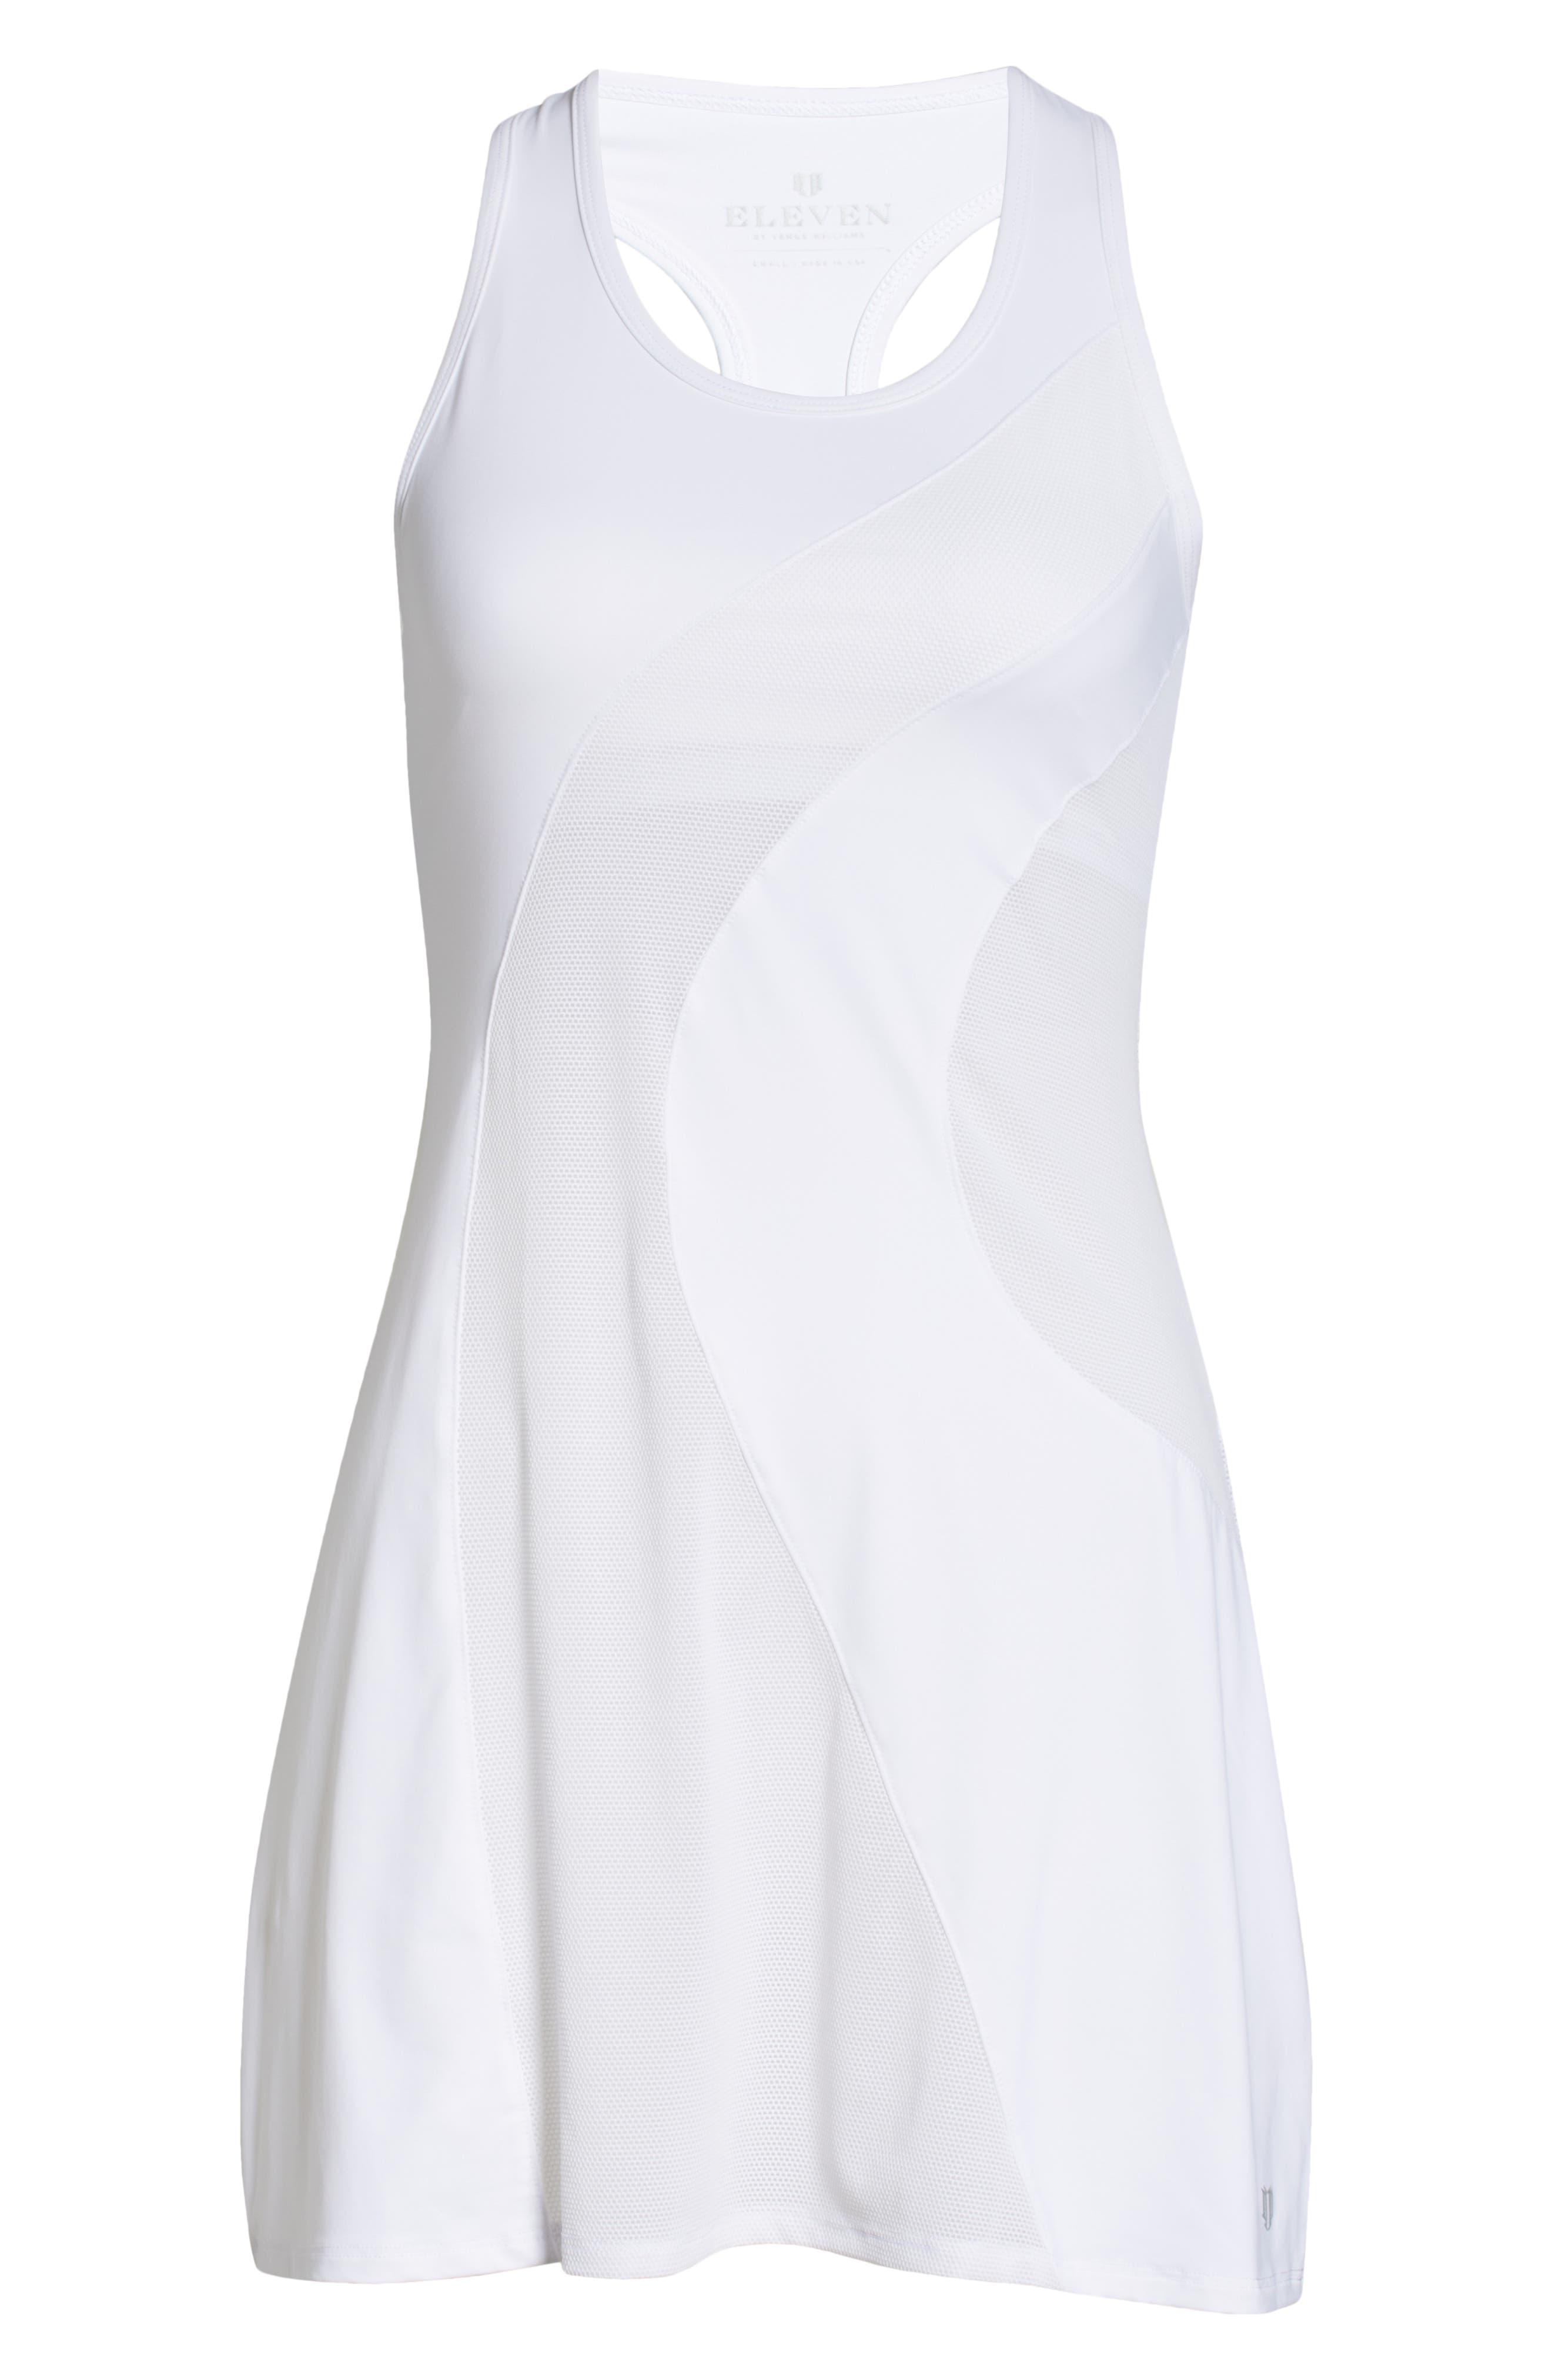 Venus Women's Chevron Shirt Dress